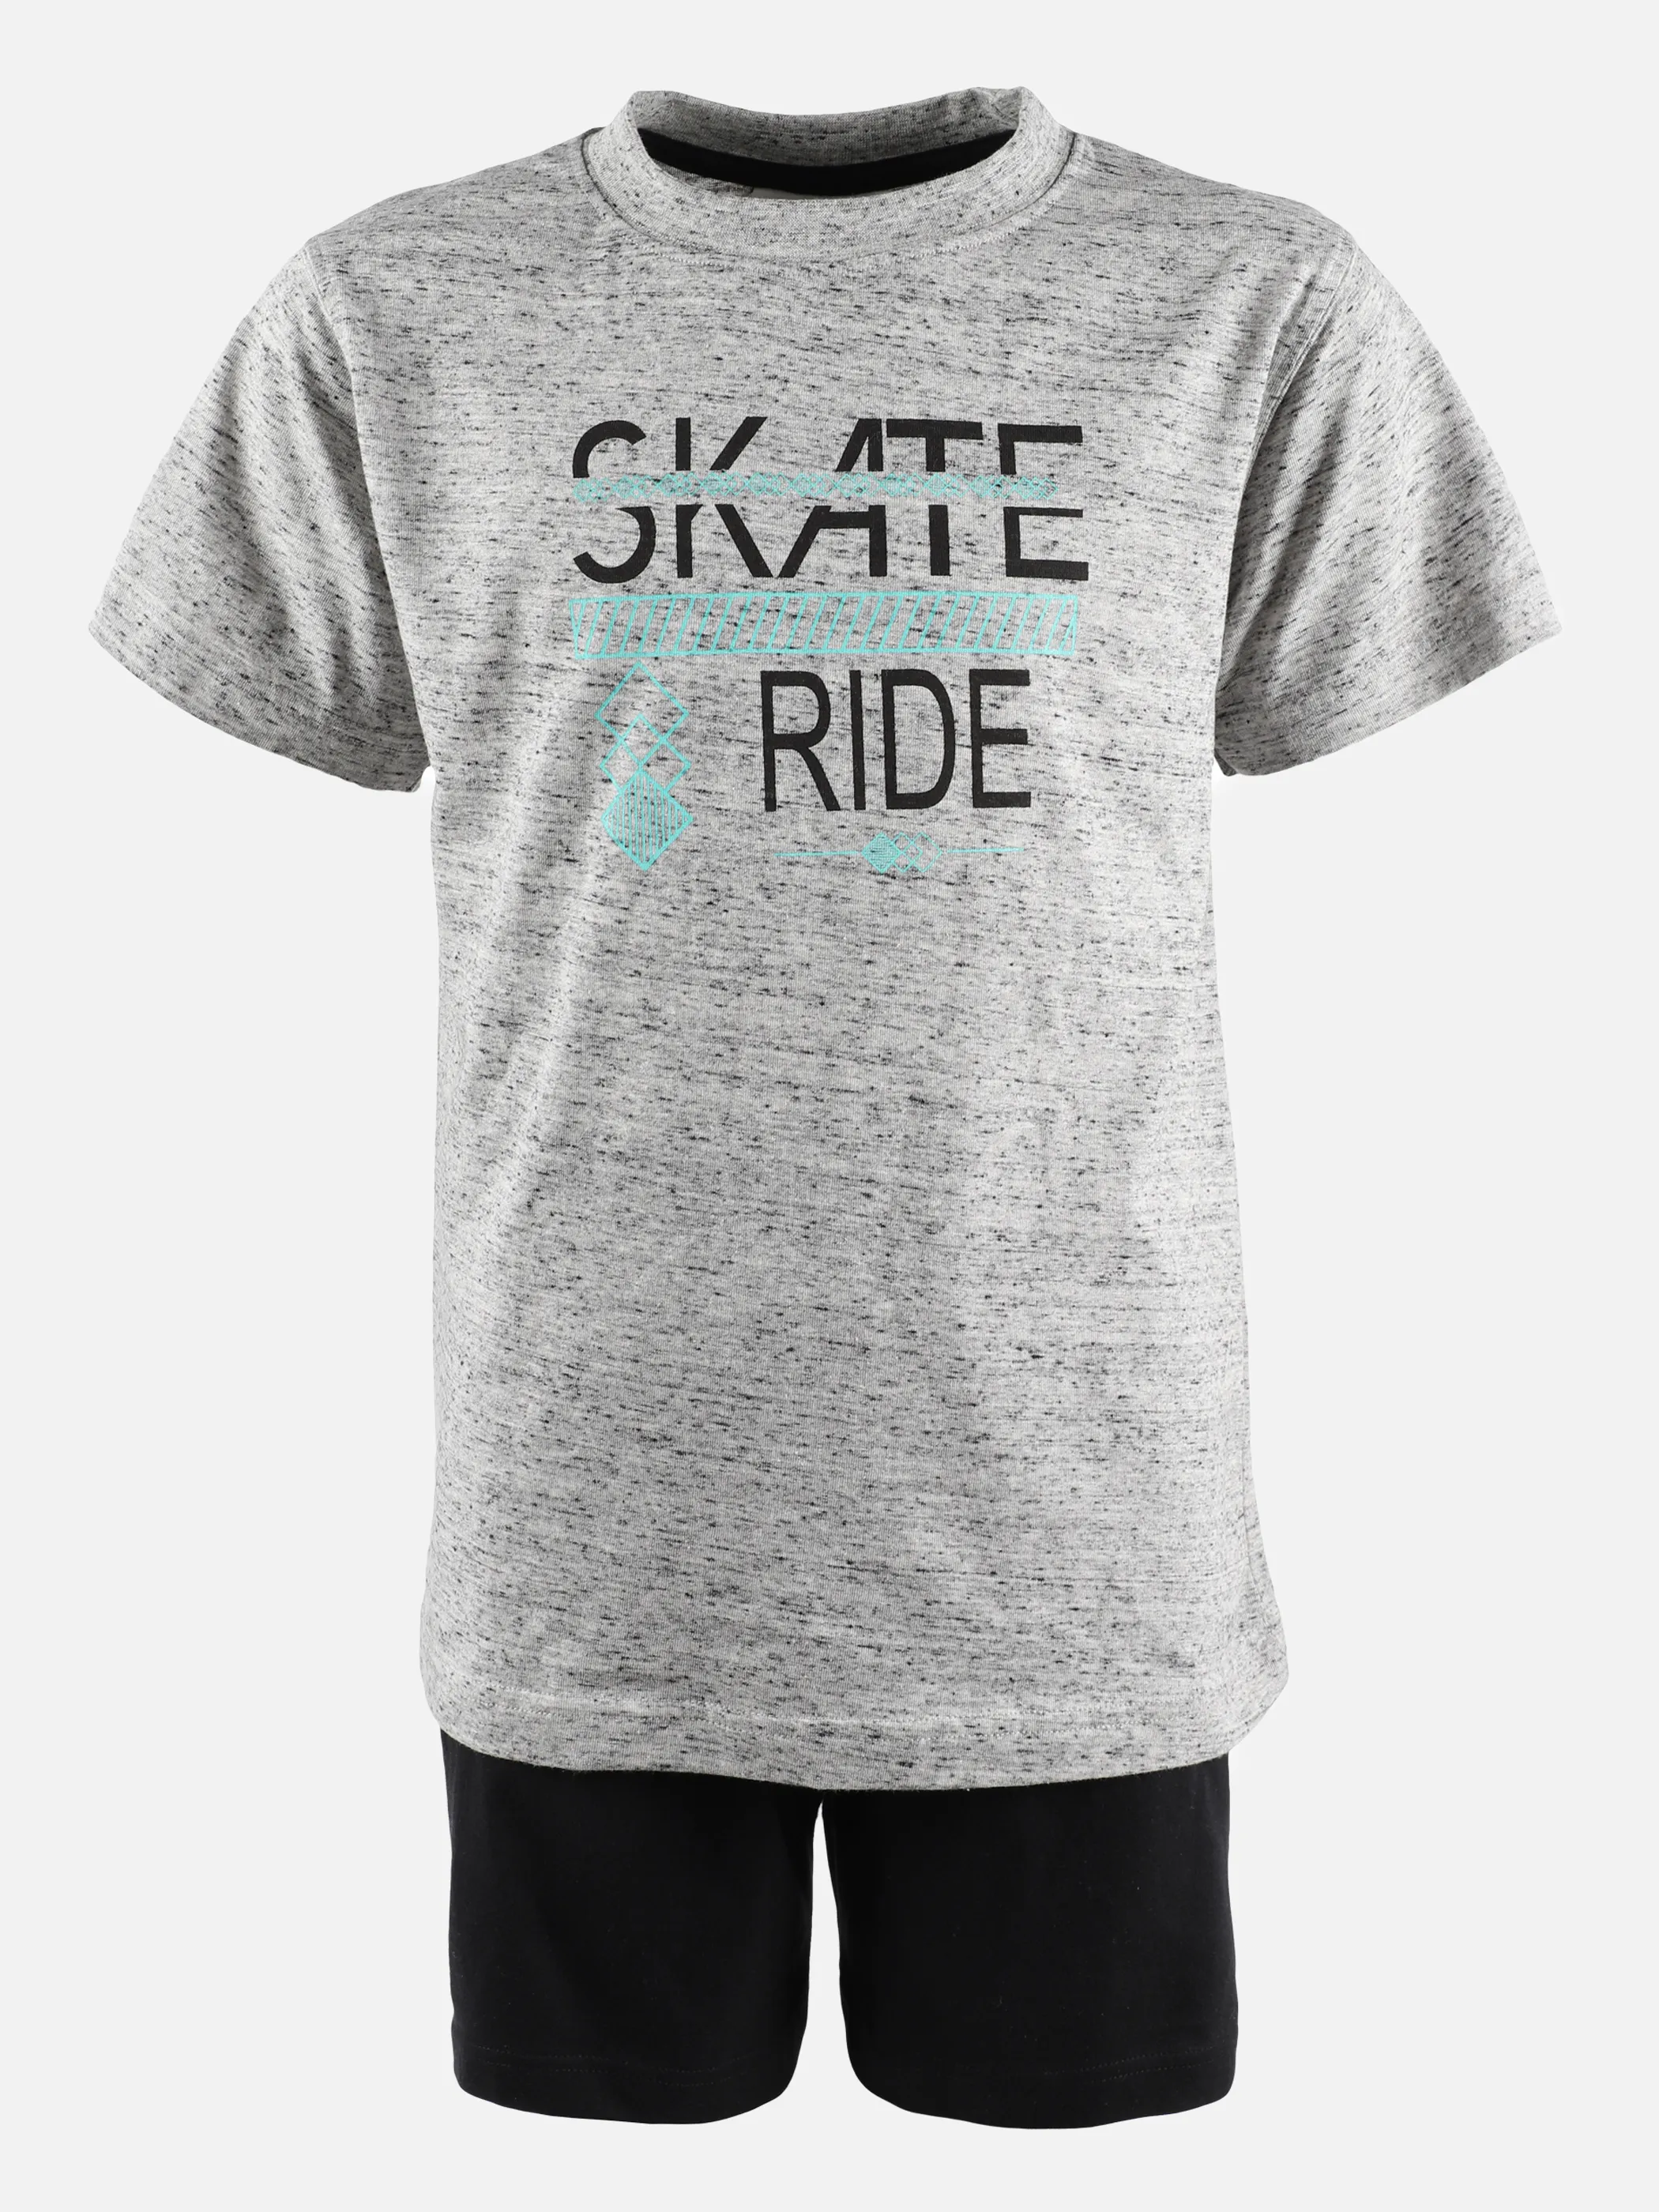 Stop + Go TB Shorty Skate Life Shirt 1/2 Grau 873698 GRAU/SCHWA 1